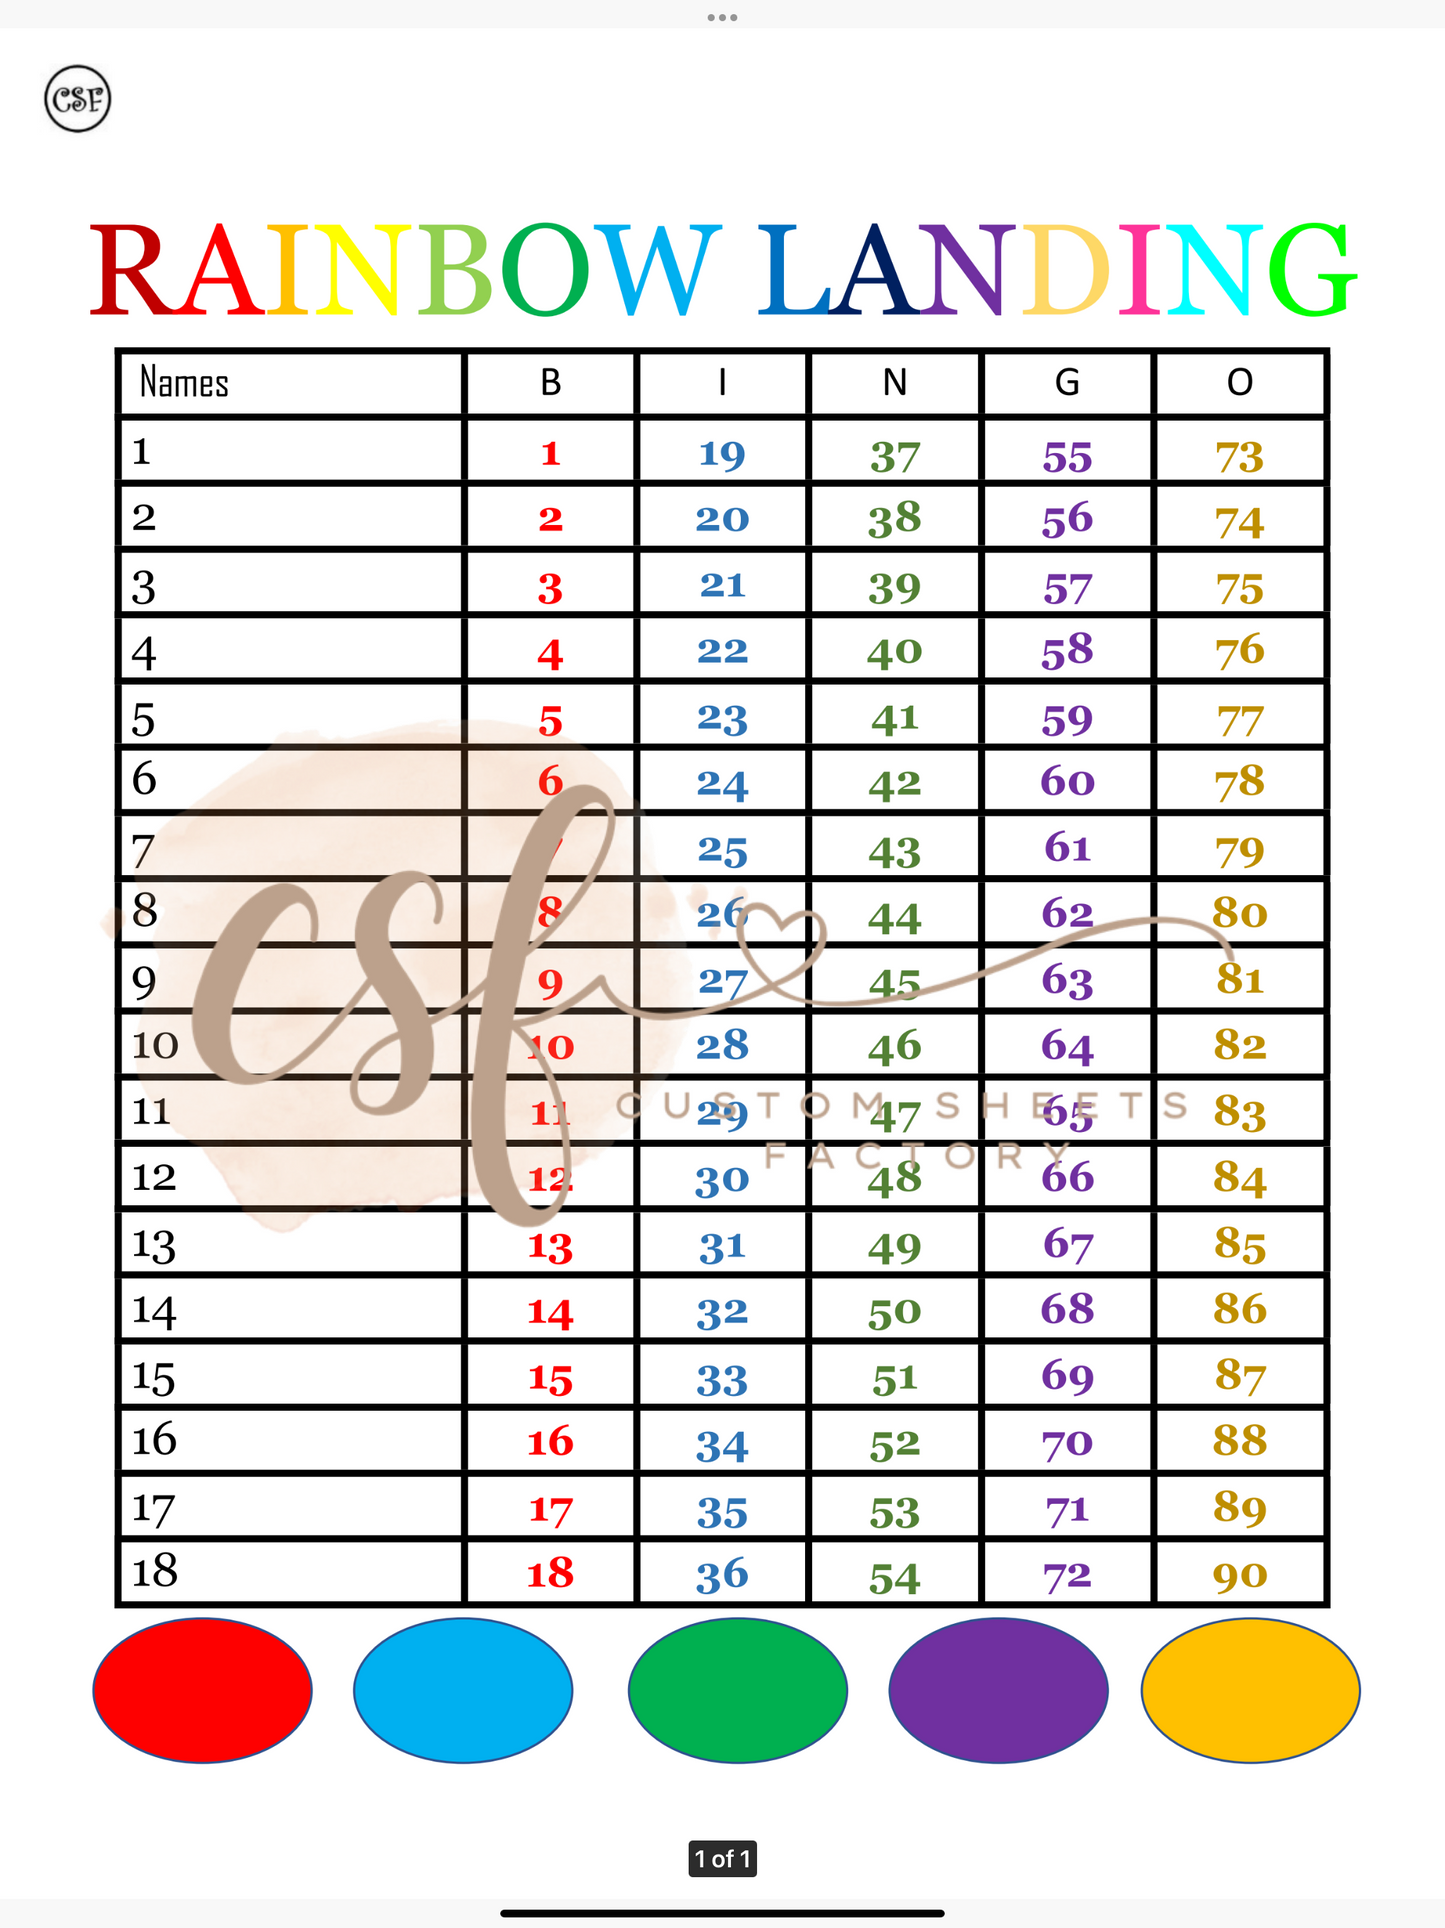 Rainbow Landing - 18 line - 90s ball